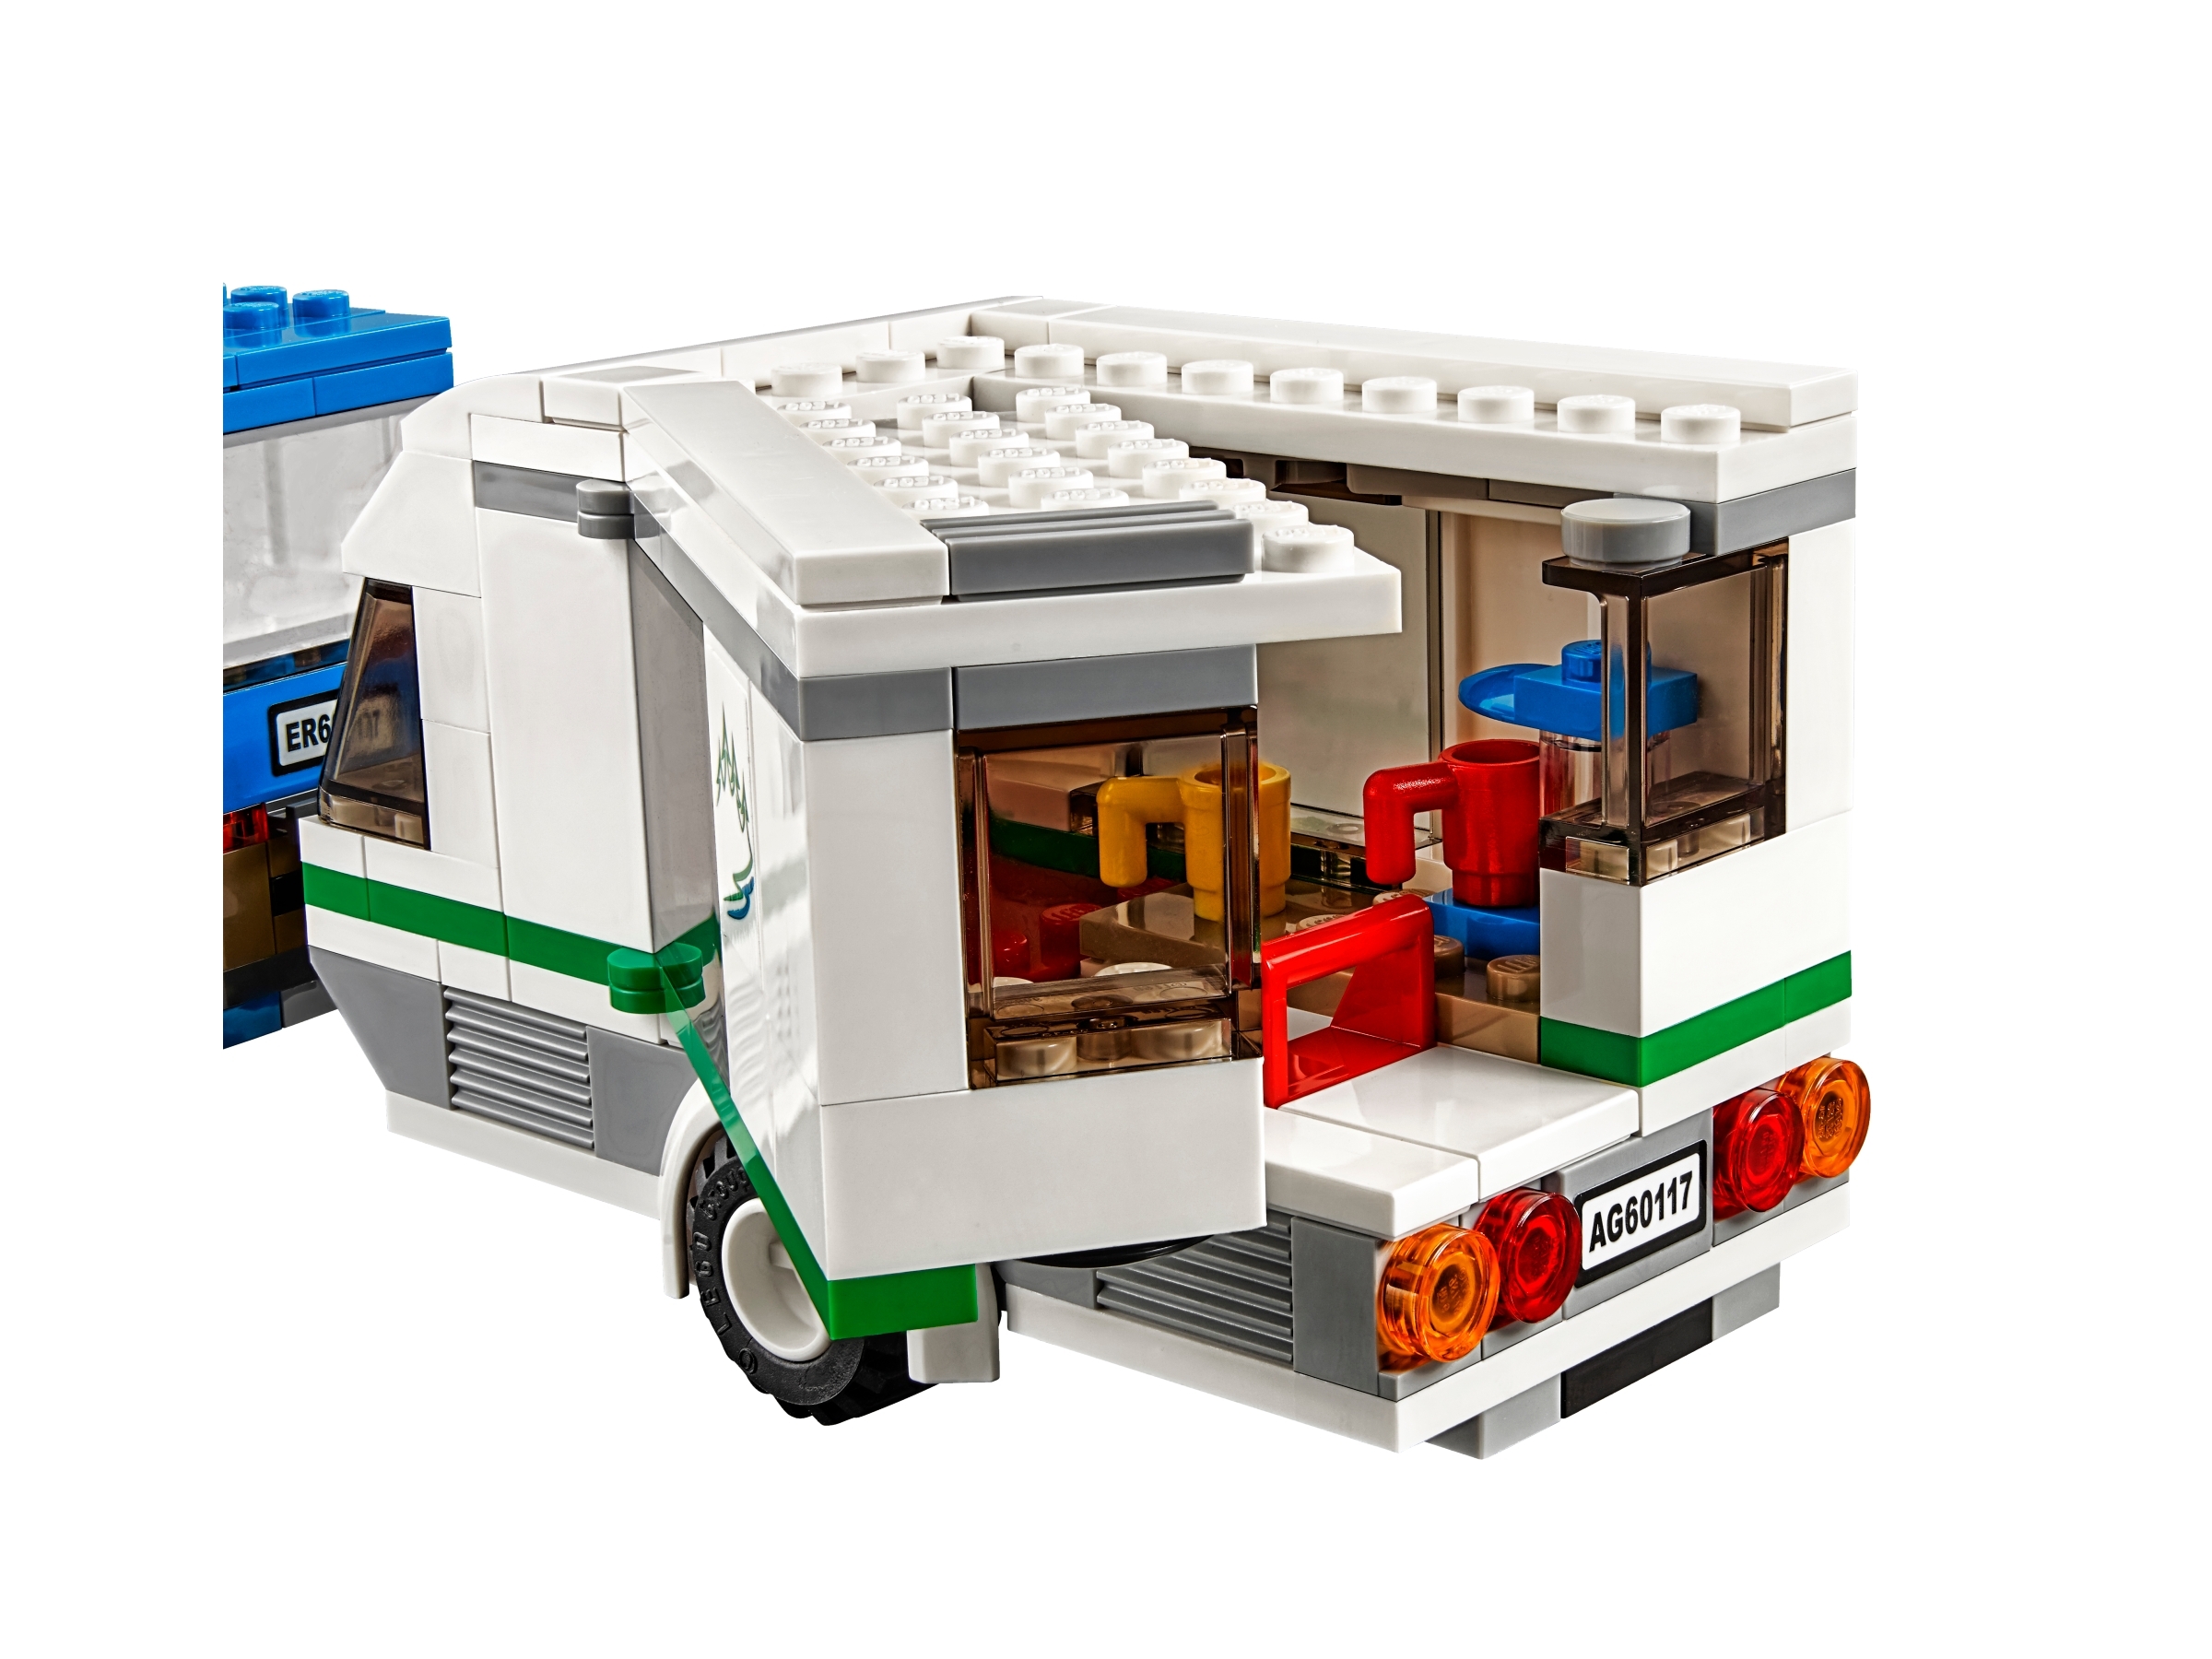 lego city van and caravan